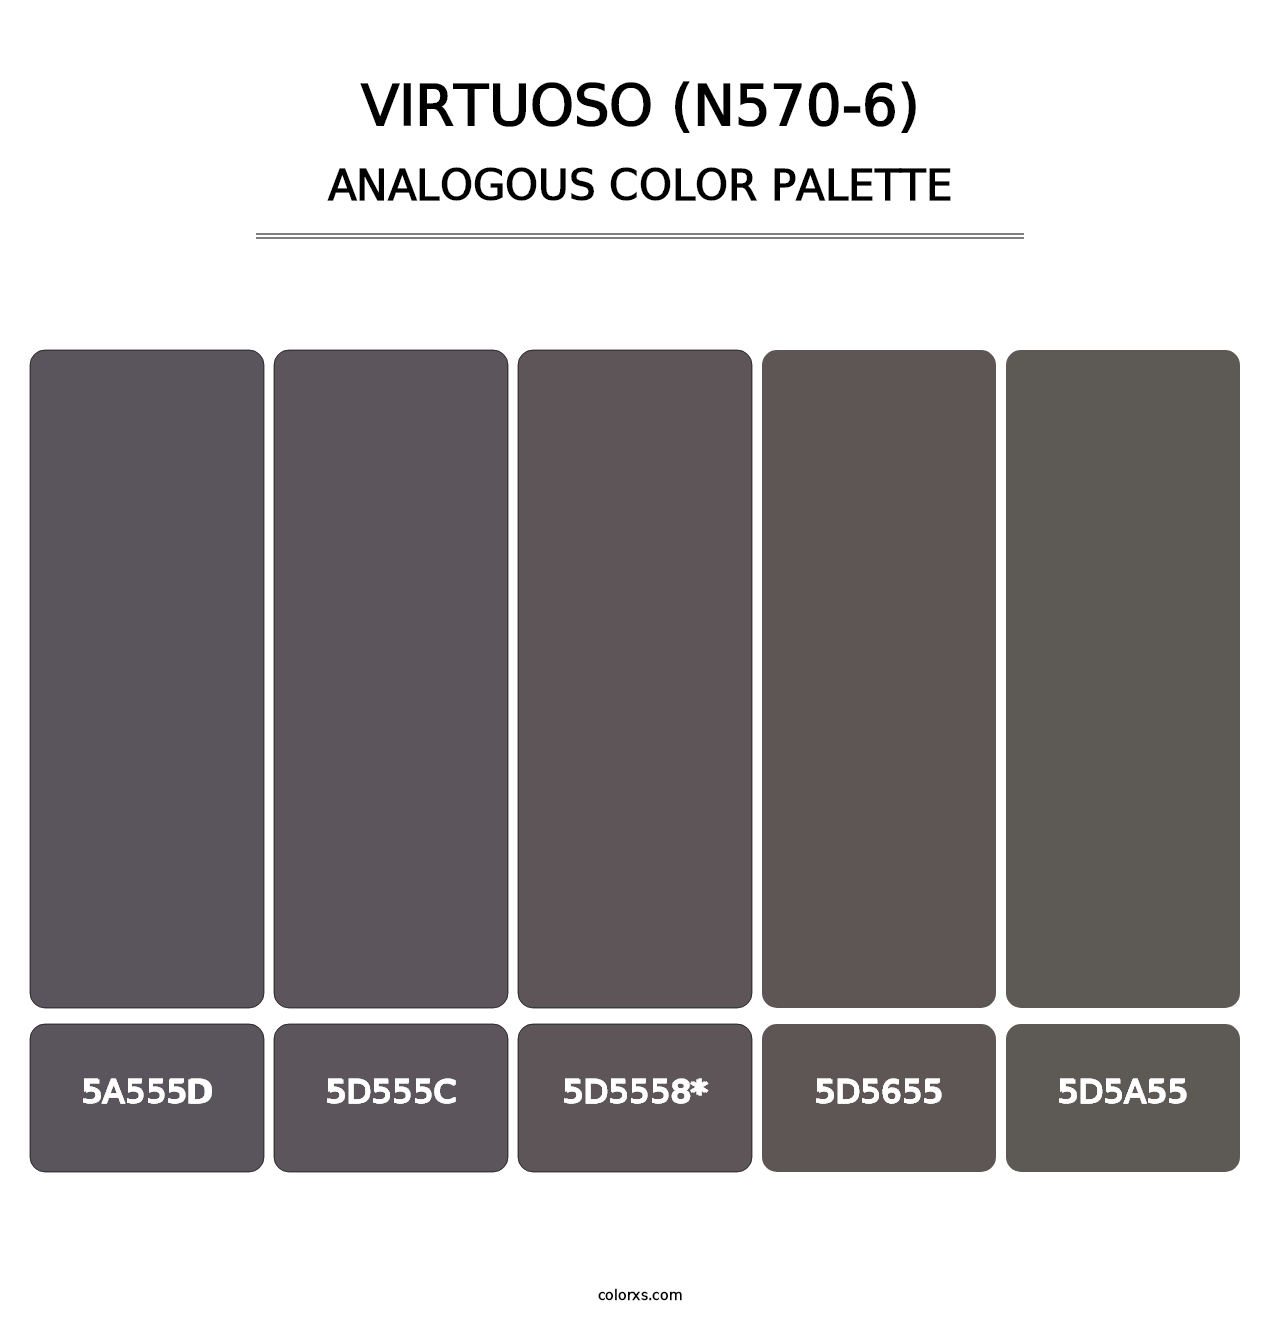 Virtuoso (N570-6) - Analogous Color Palette